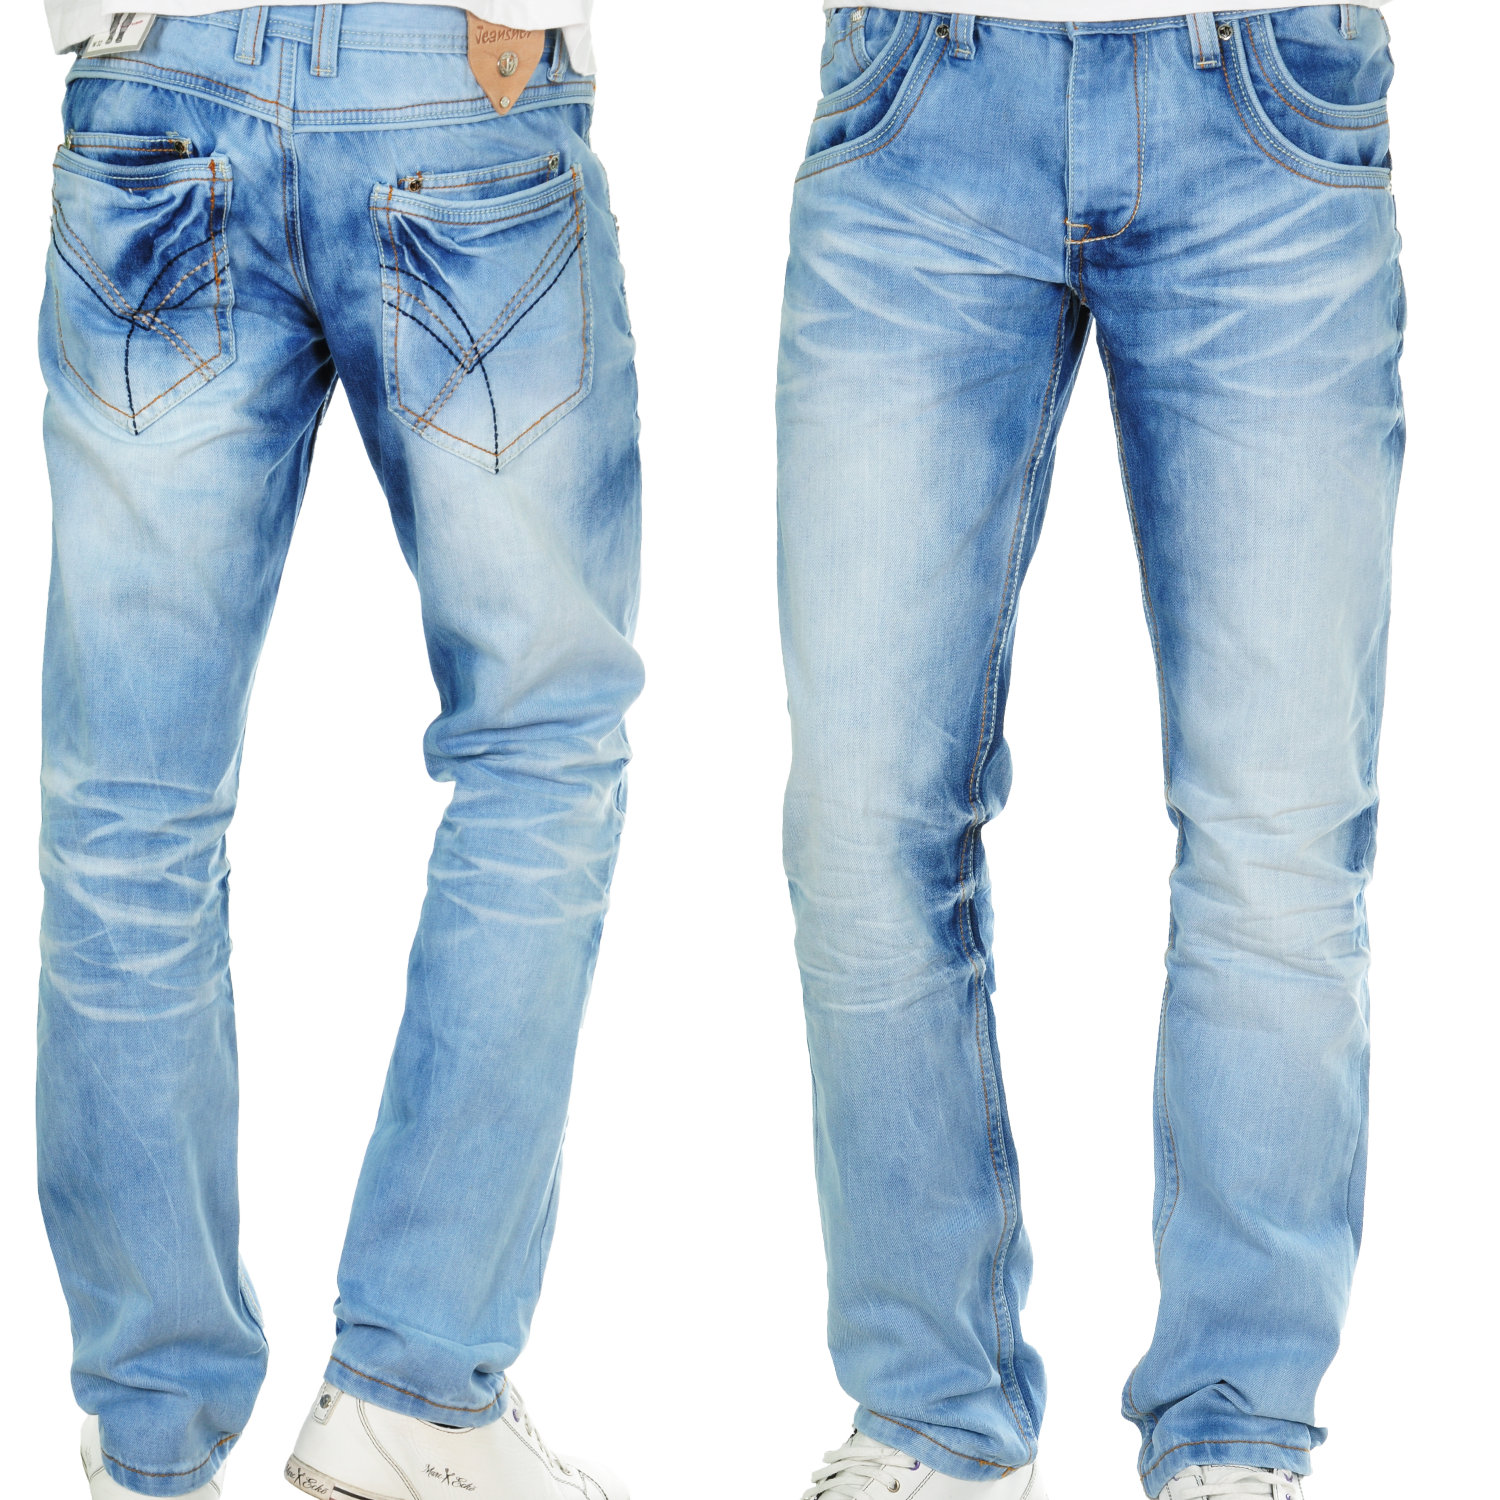 Foto Milano Style Jeansnet Regular Fit Jeans Azul Claro